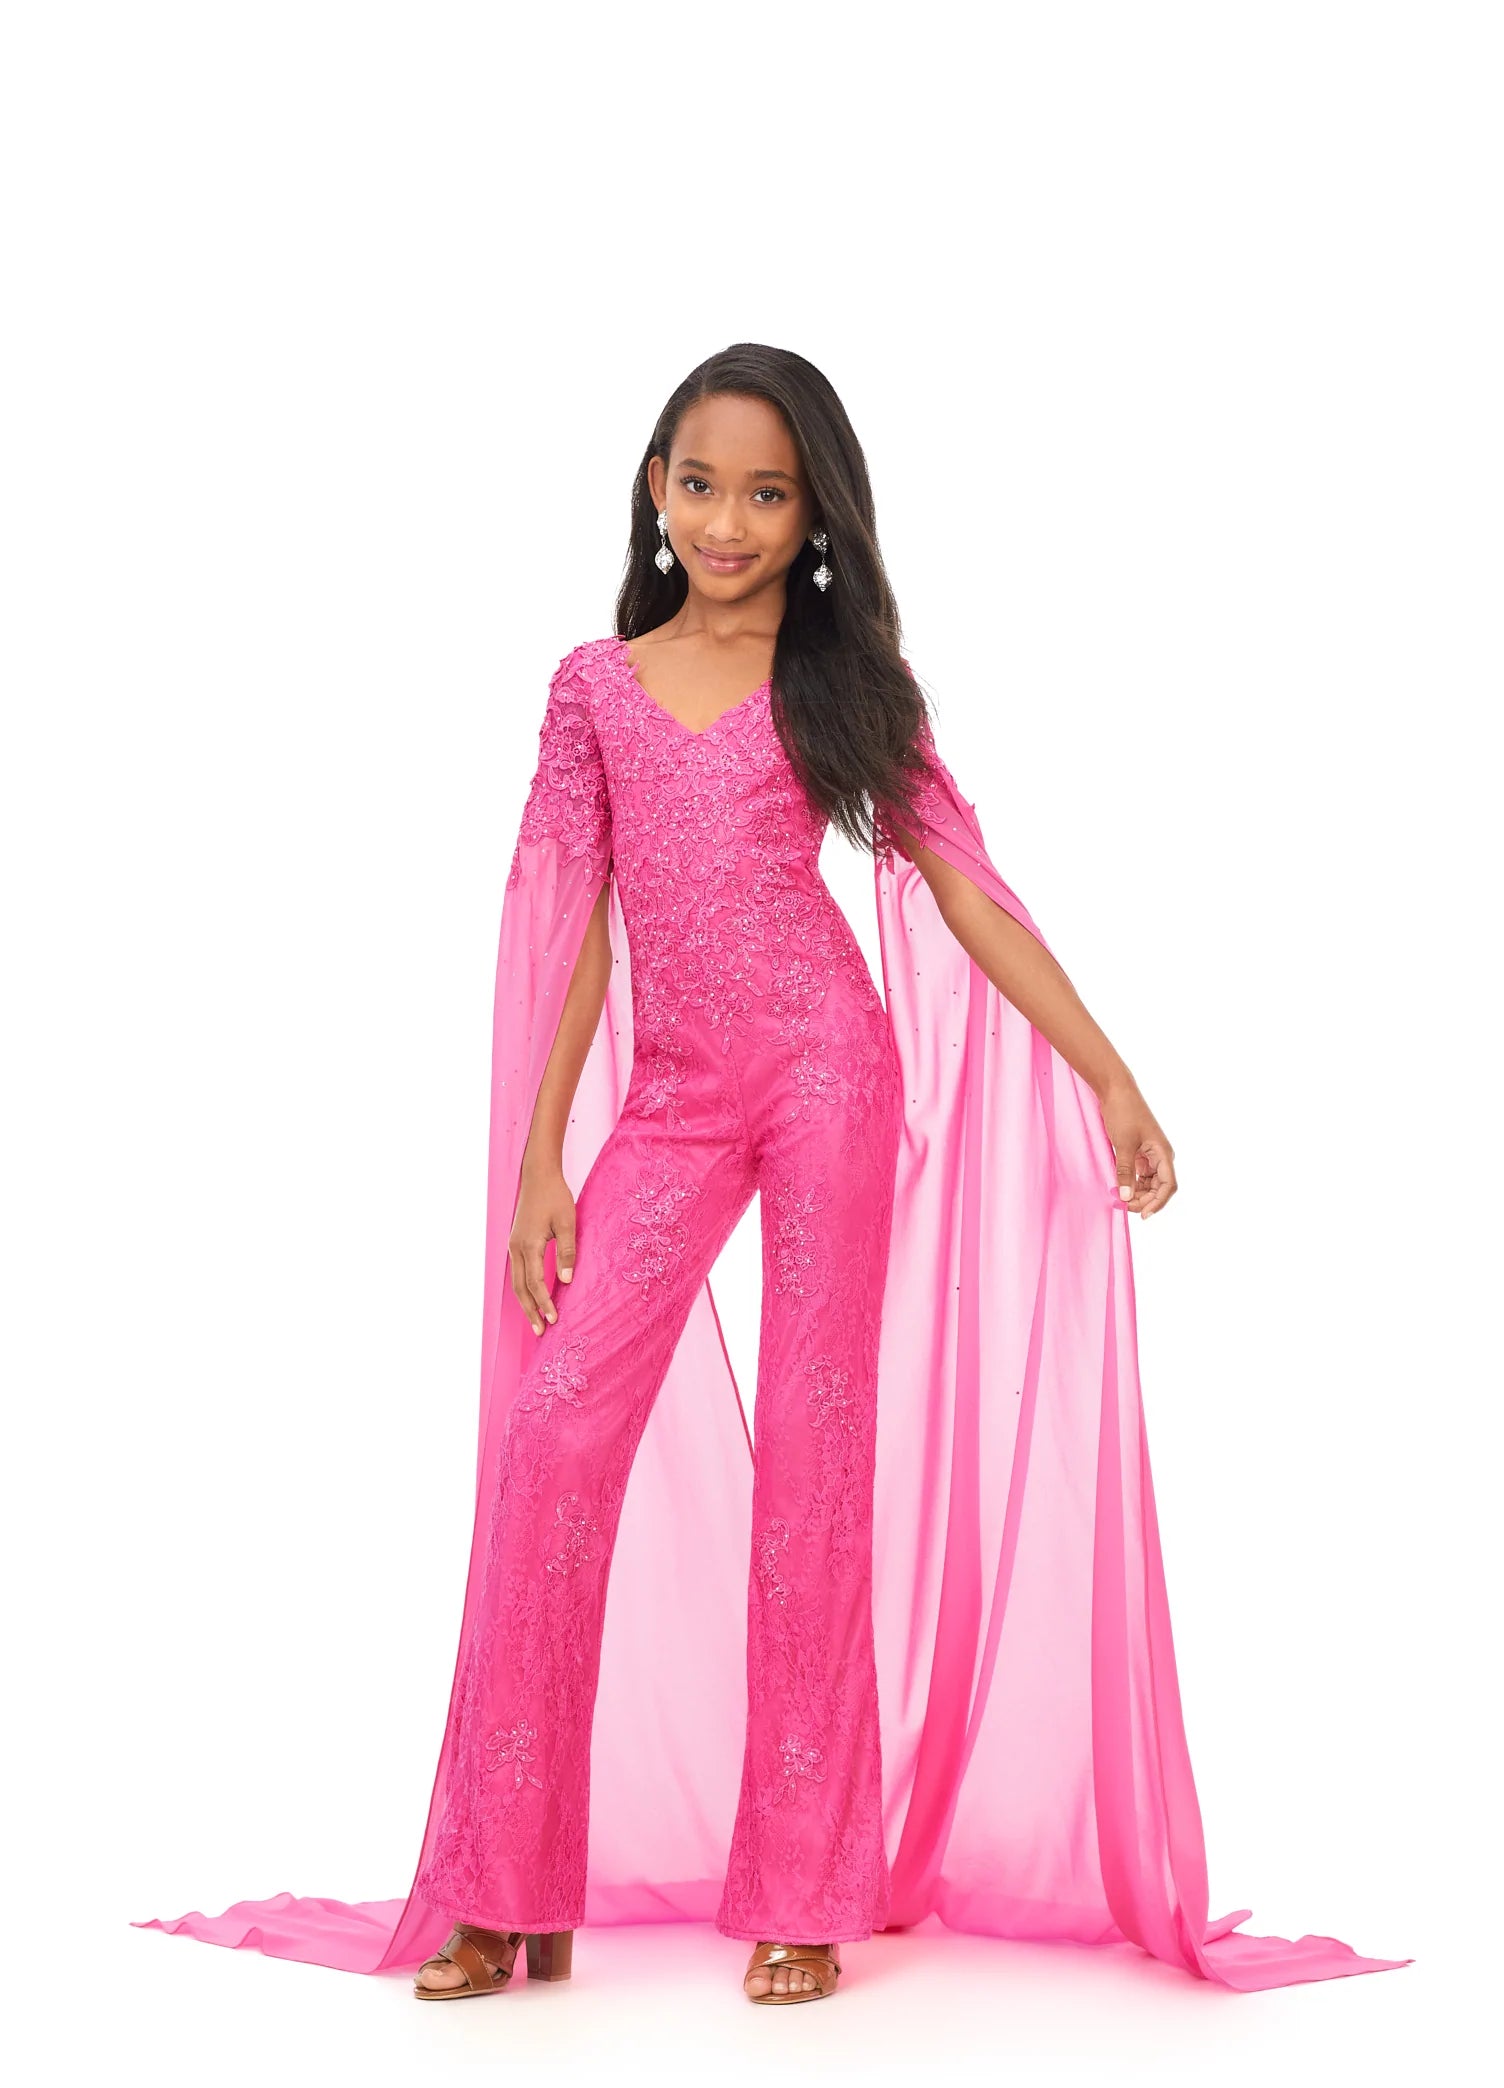 Ashley Lauren Kids 8162 Size 4 Pink Lace Girls Cape Sleeve